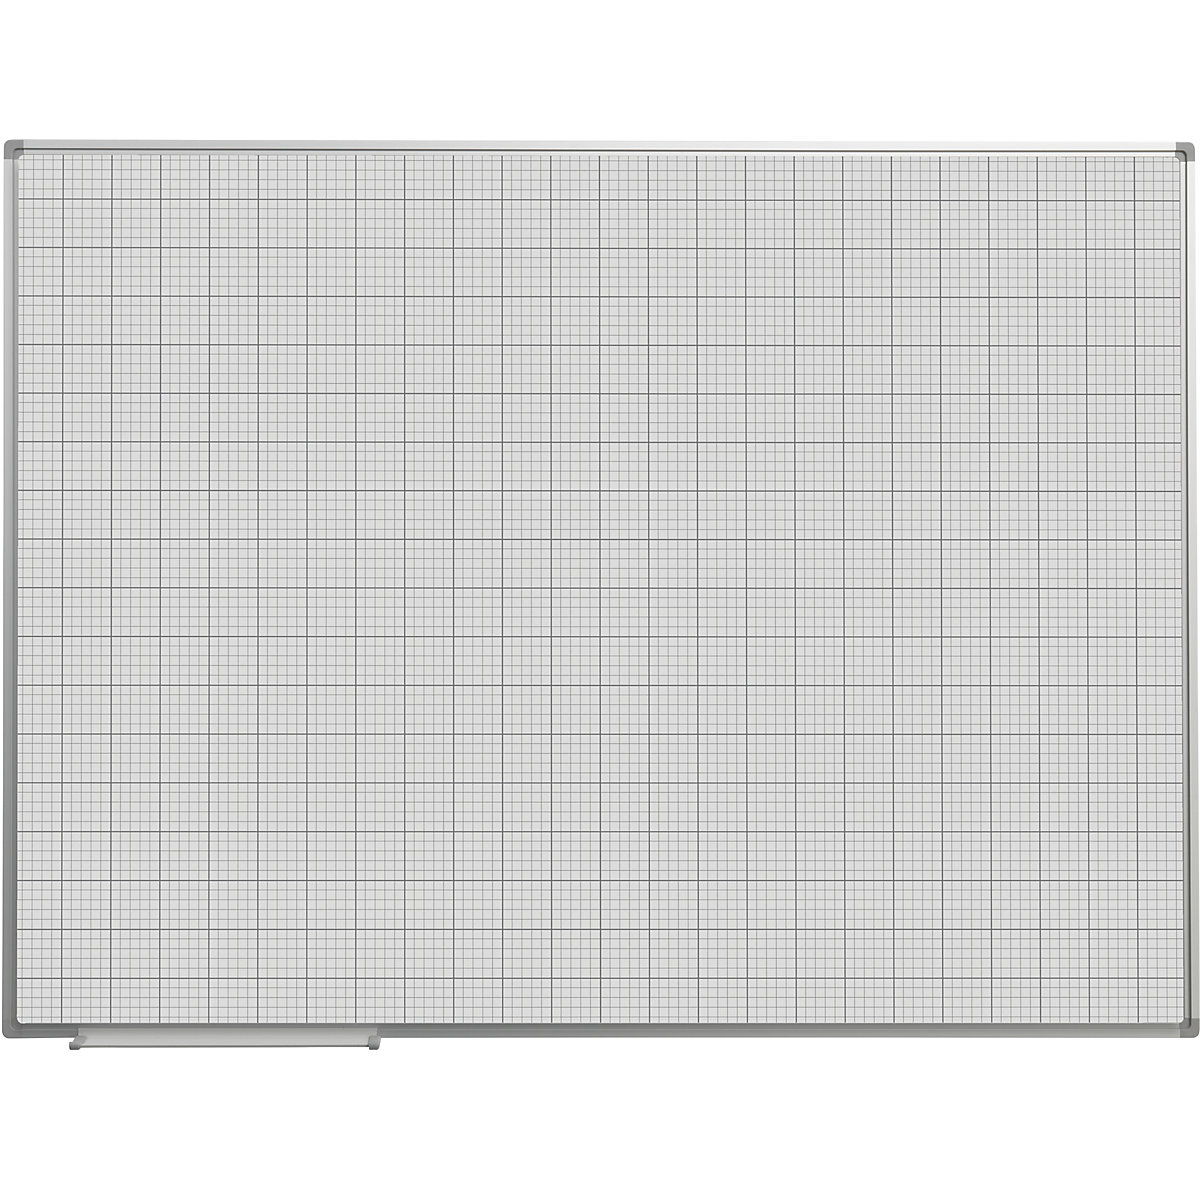 Grid board – eurokraft basic, painted white, WxH 1200 x 900 mm, 10 x 10 / 50 x 50 mm grid-5